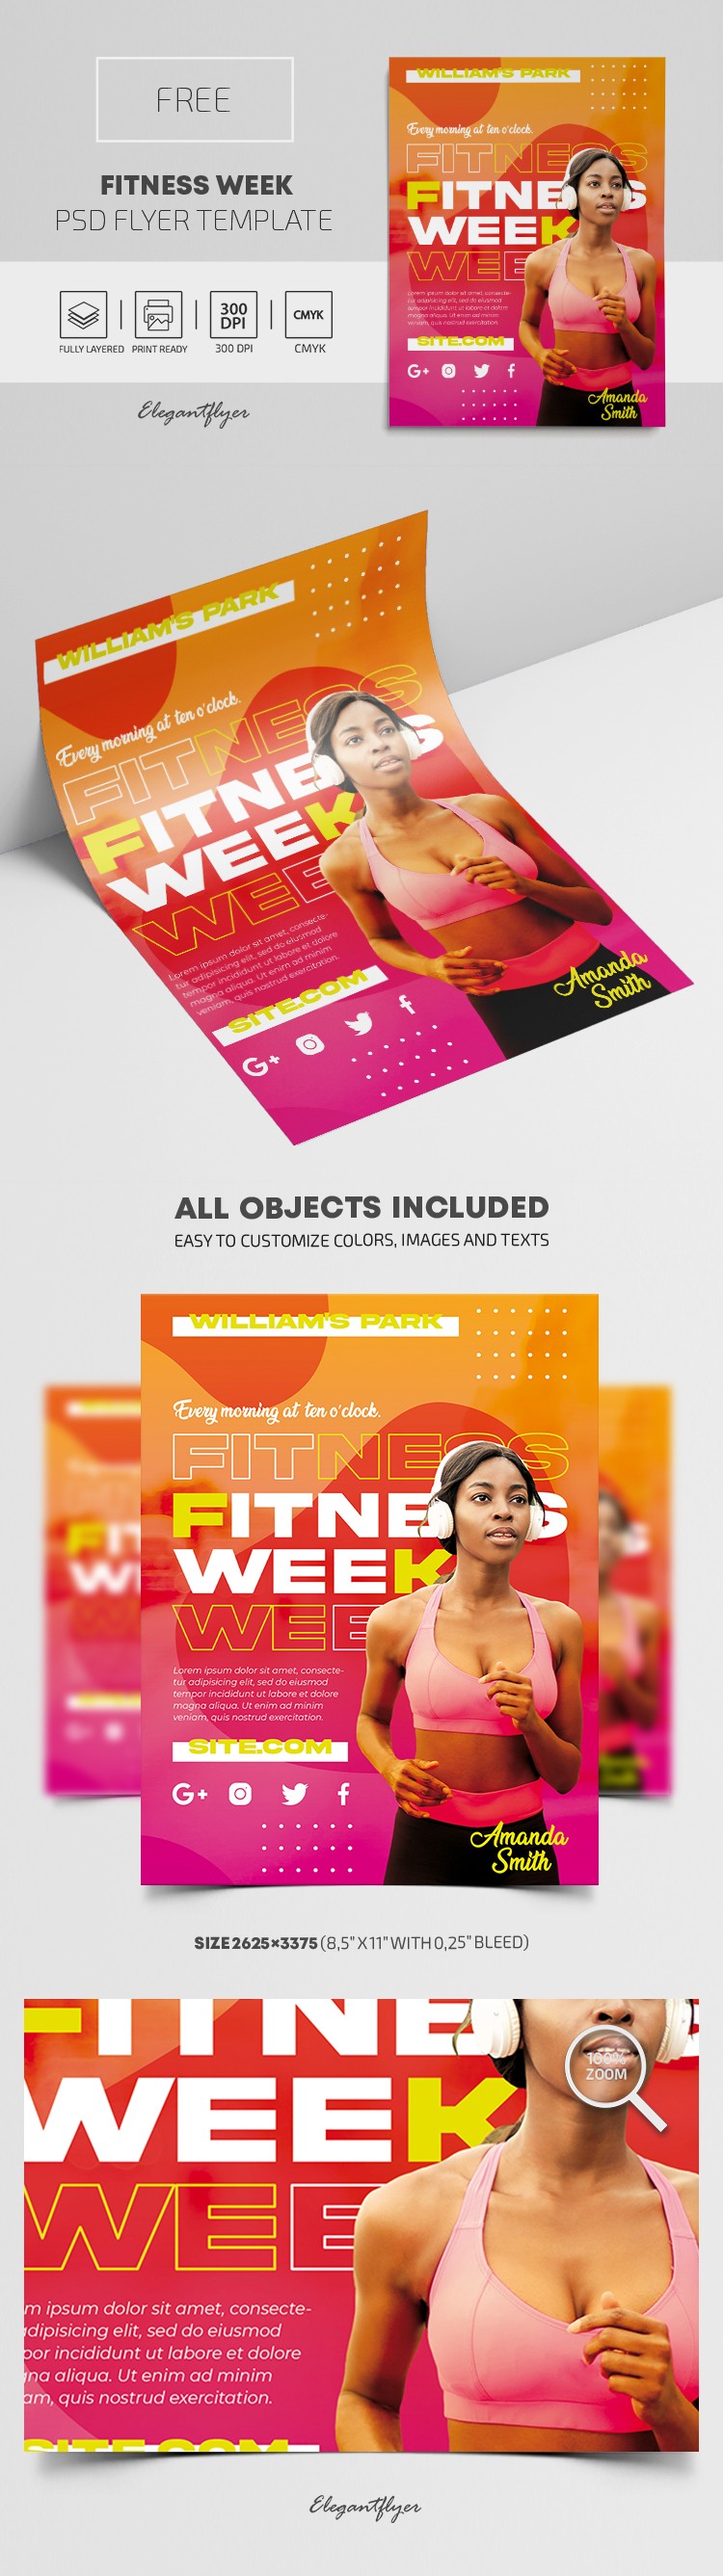 Programa de Fitness Semanal by ElegantFlyer